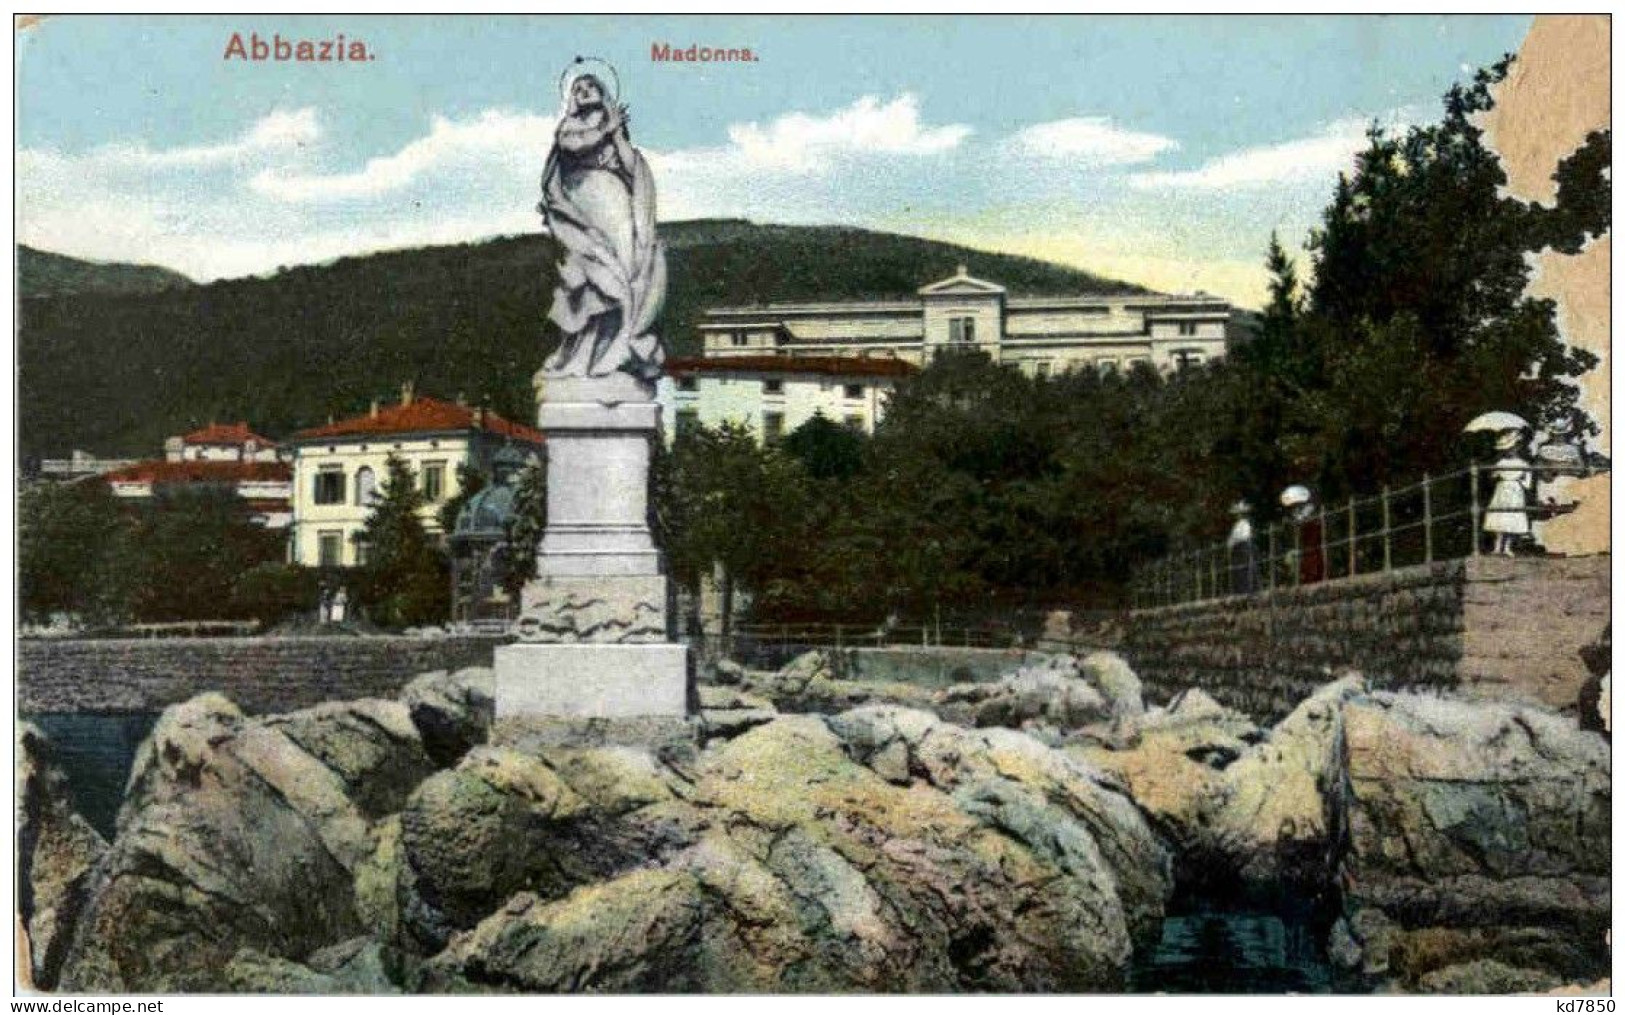 Abbazia - Madonna - Kroatien